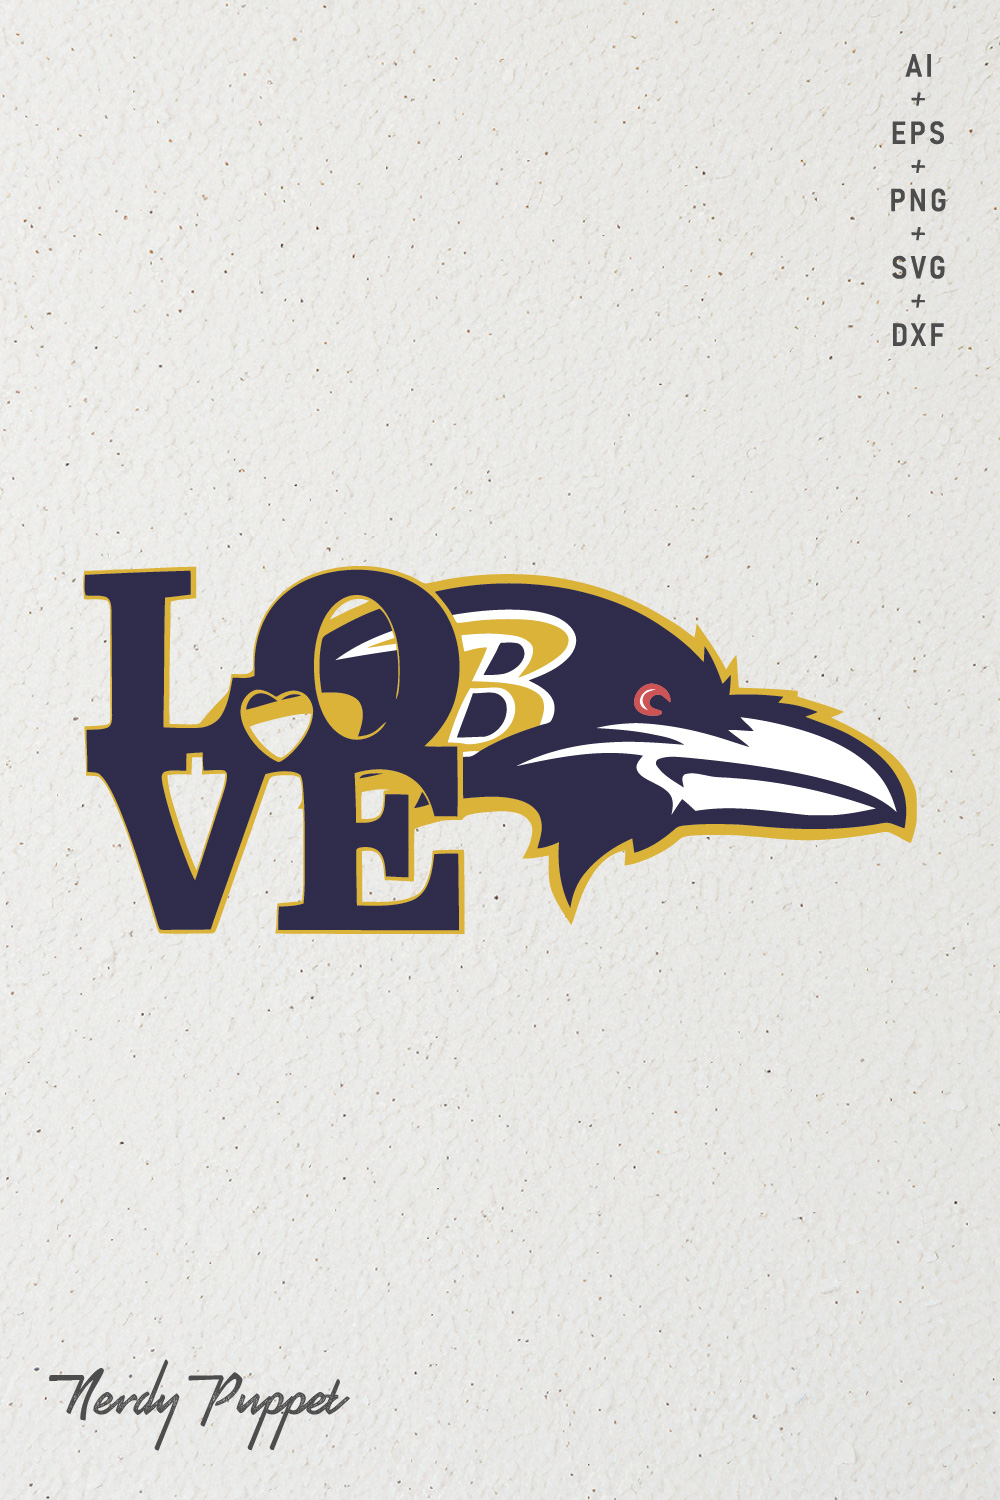 Baltimore Ravens 13 pinterest preview image.